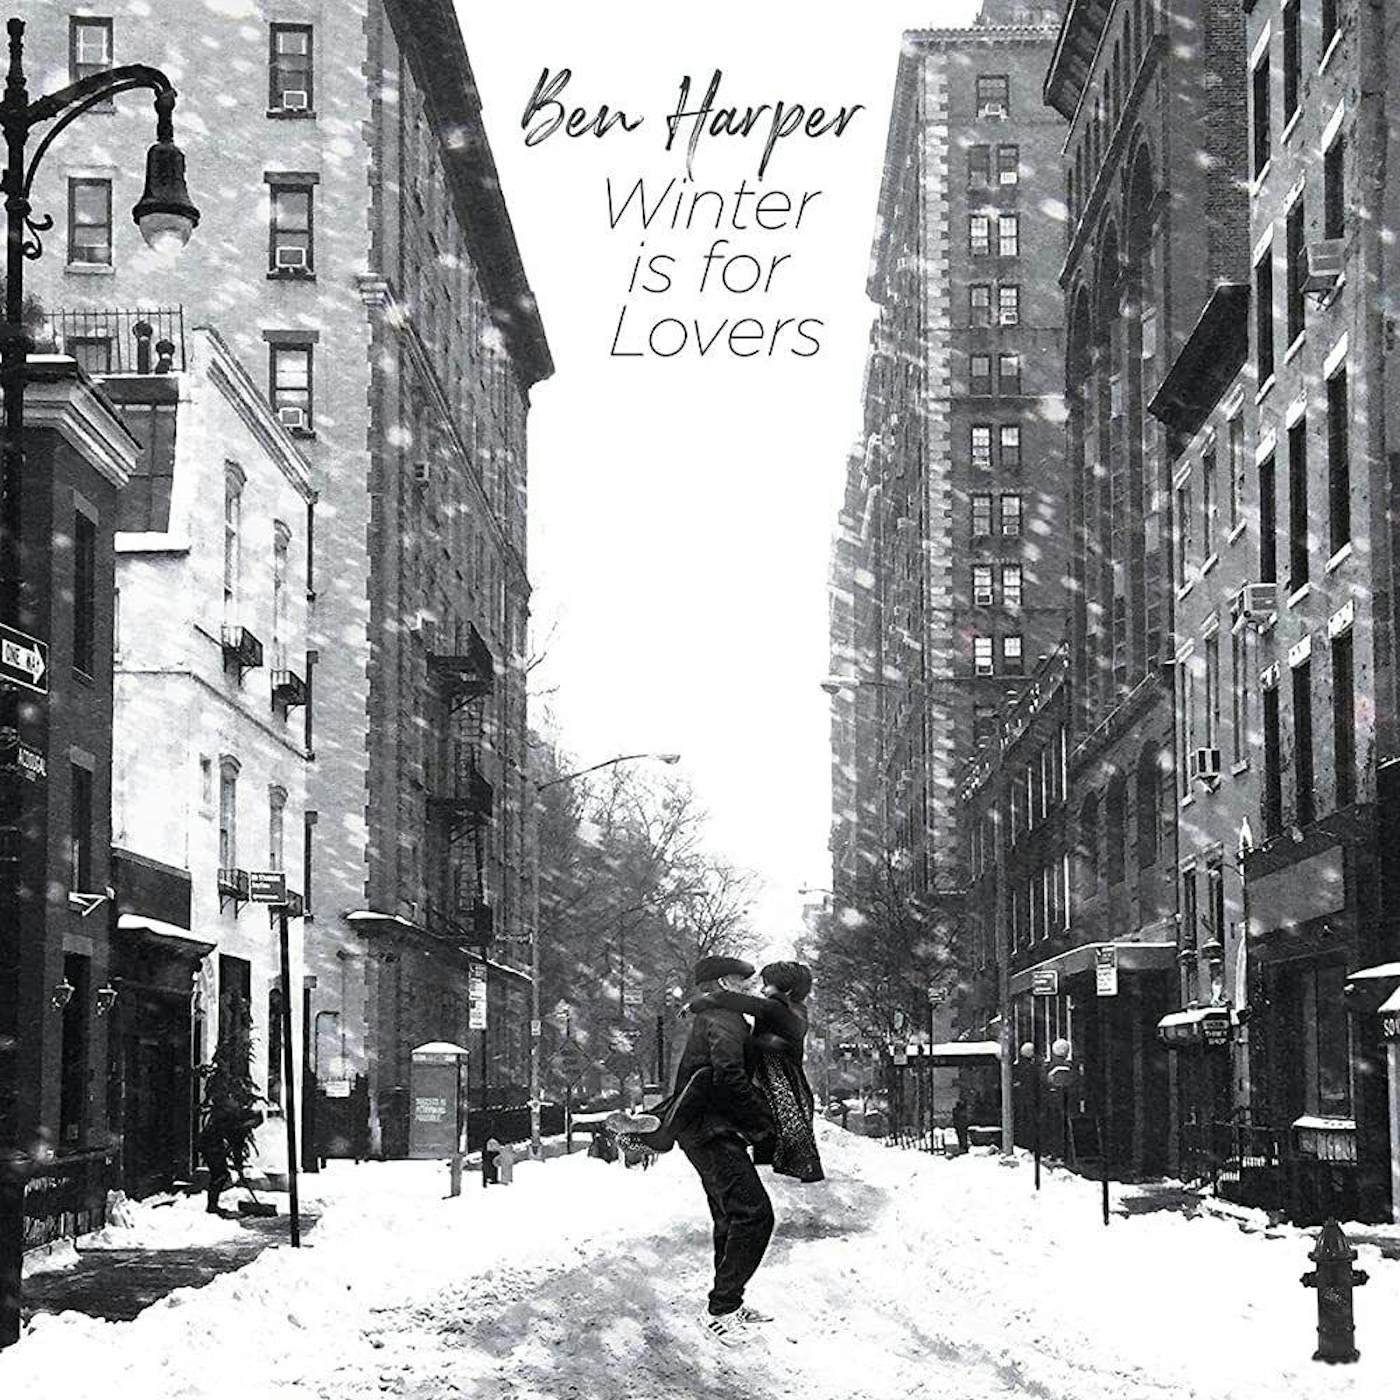 Ben Harper Winter Is For Lovers (Opaque White) Vinyl Record